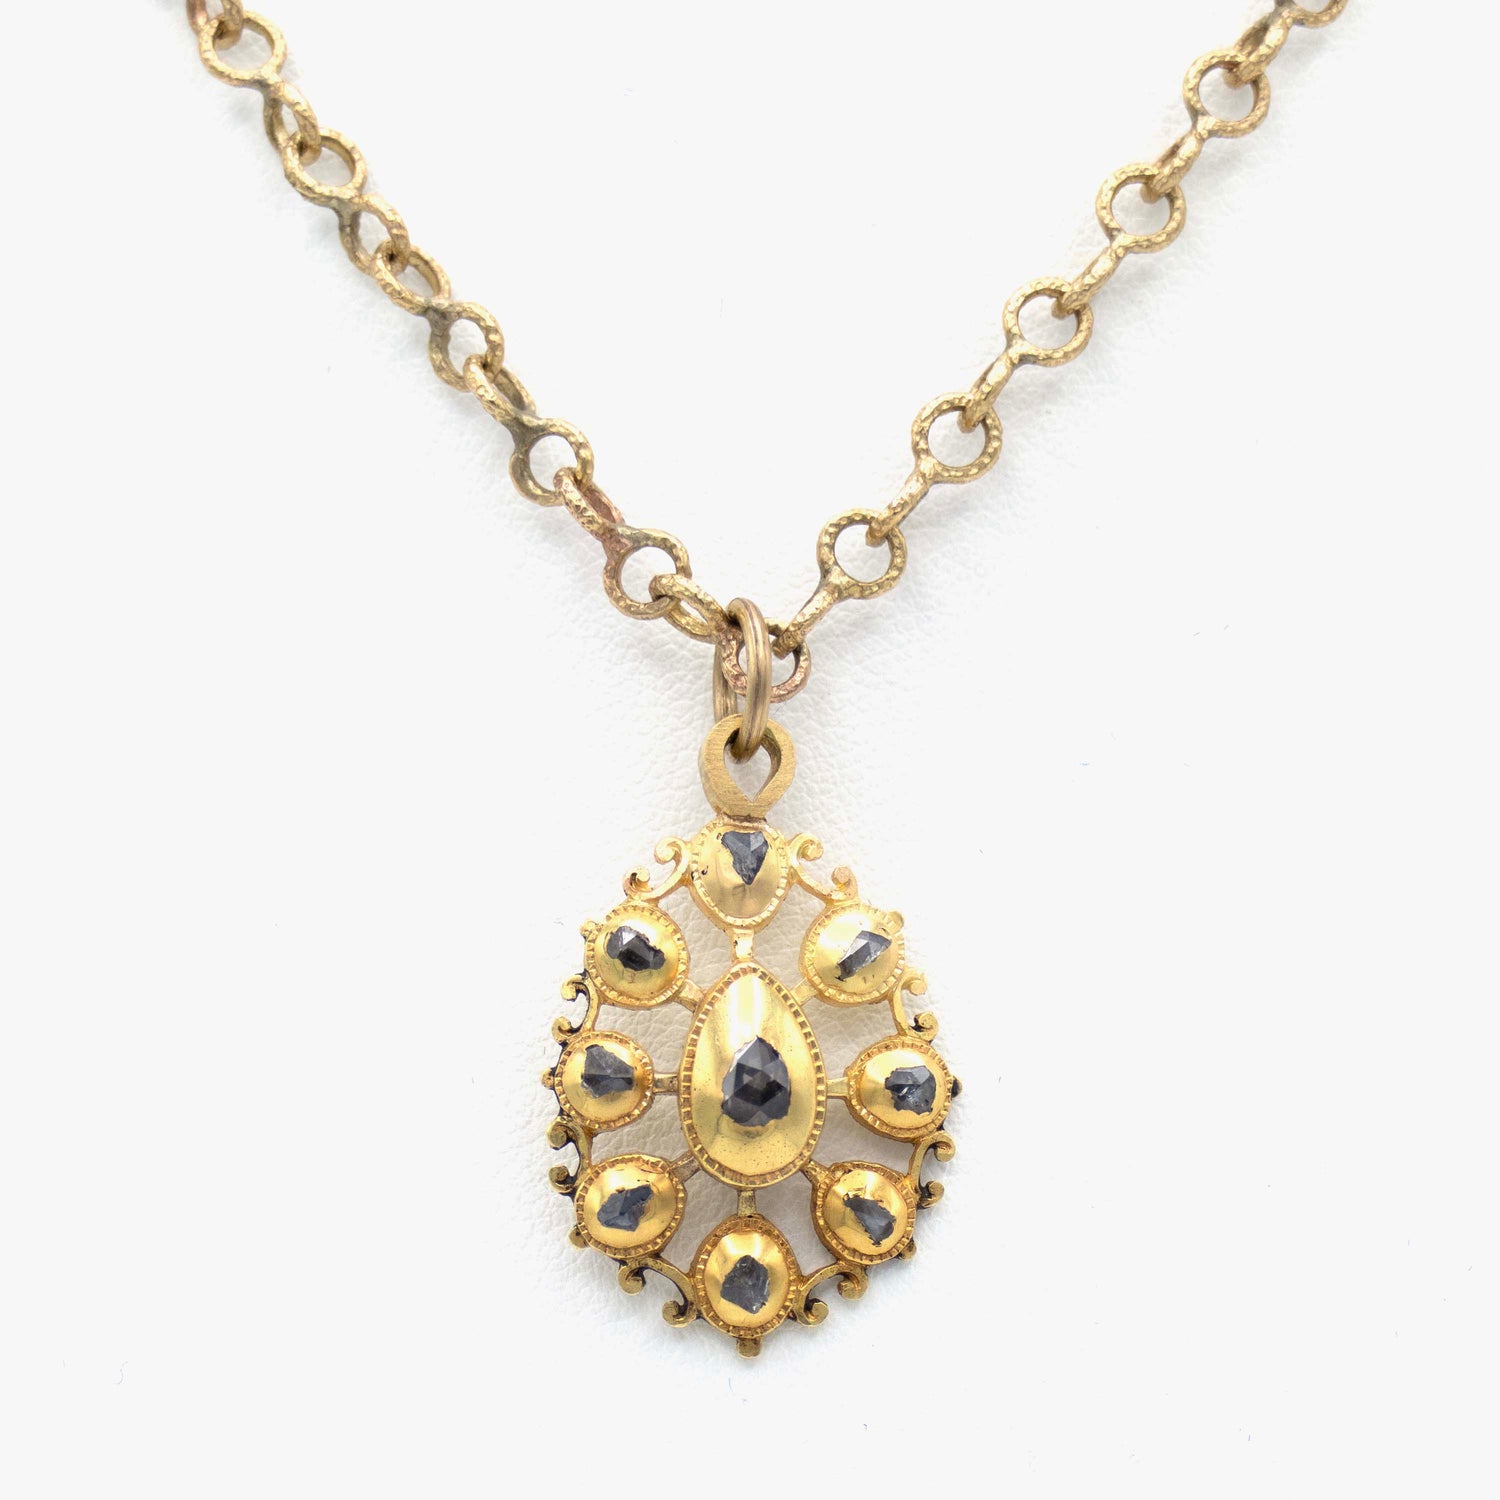 Irit Design Antique 18K Gold and Diamond Pendant Necklace